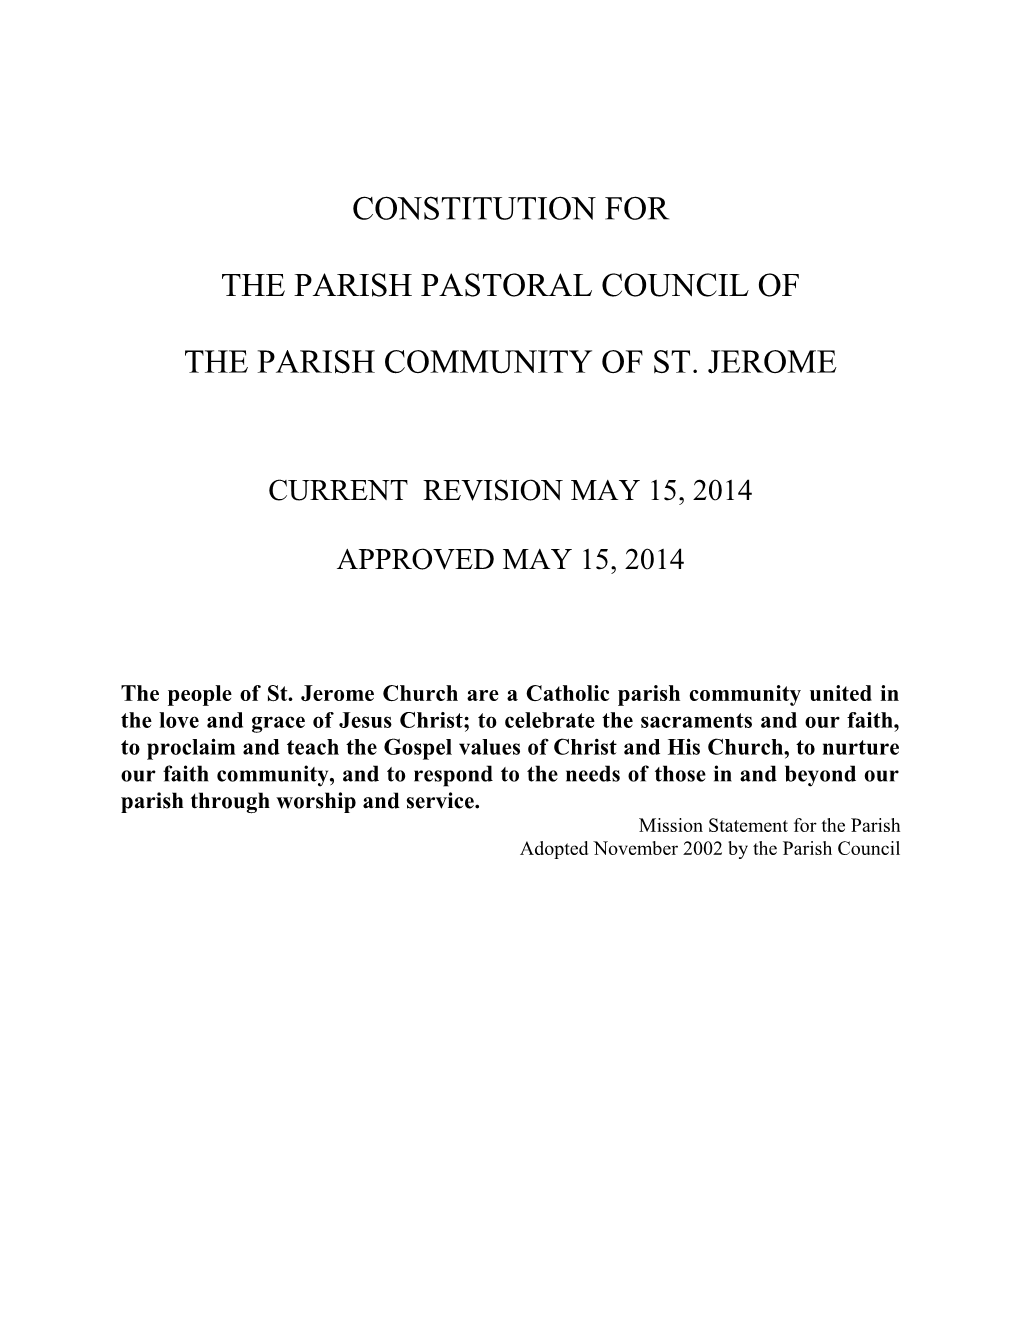 The Parish Pastoral Council Of